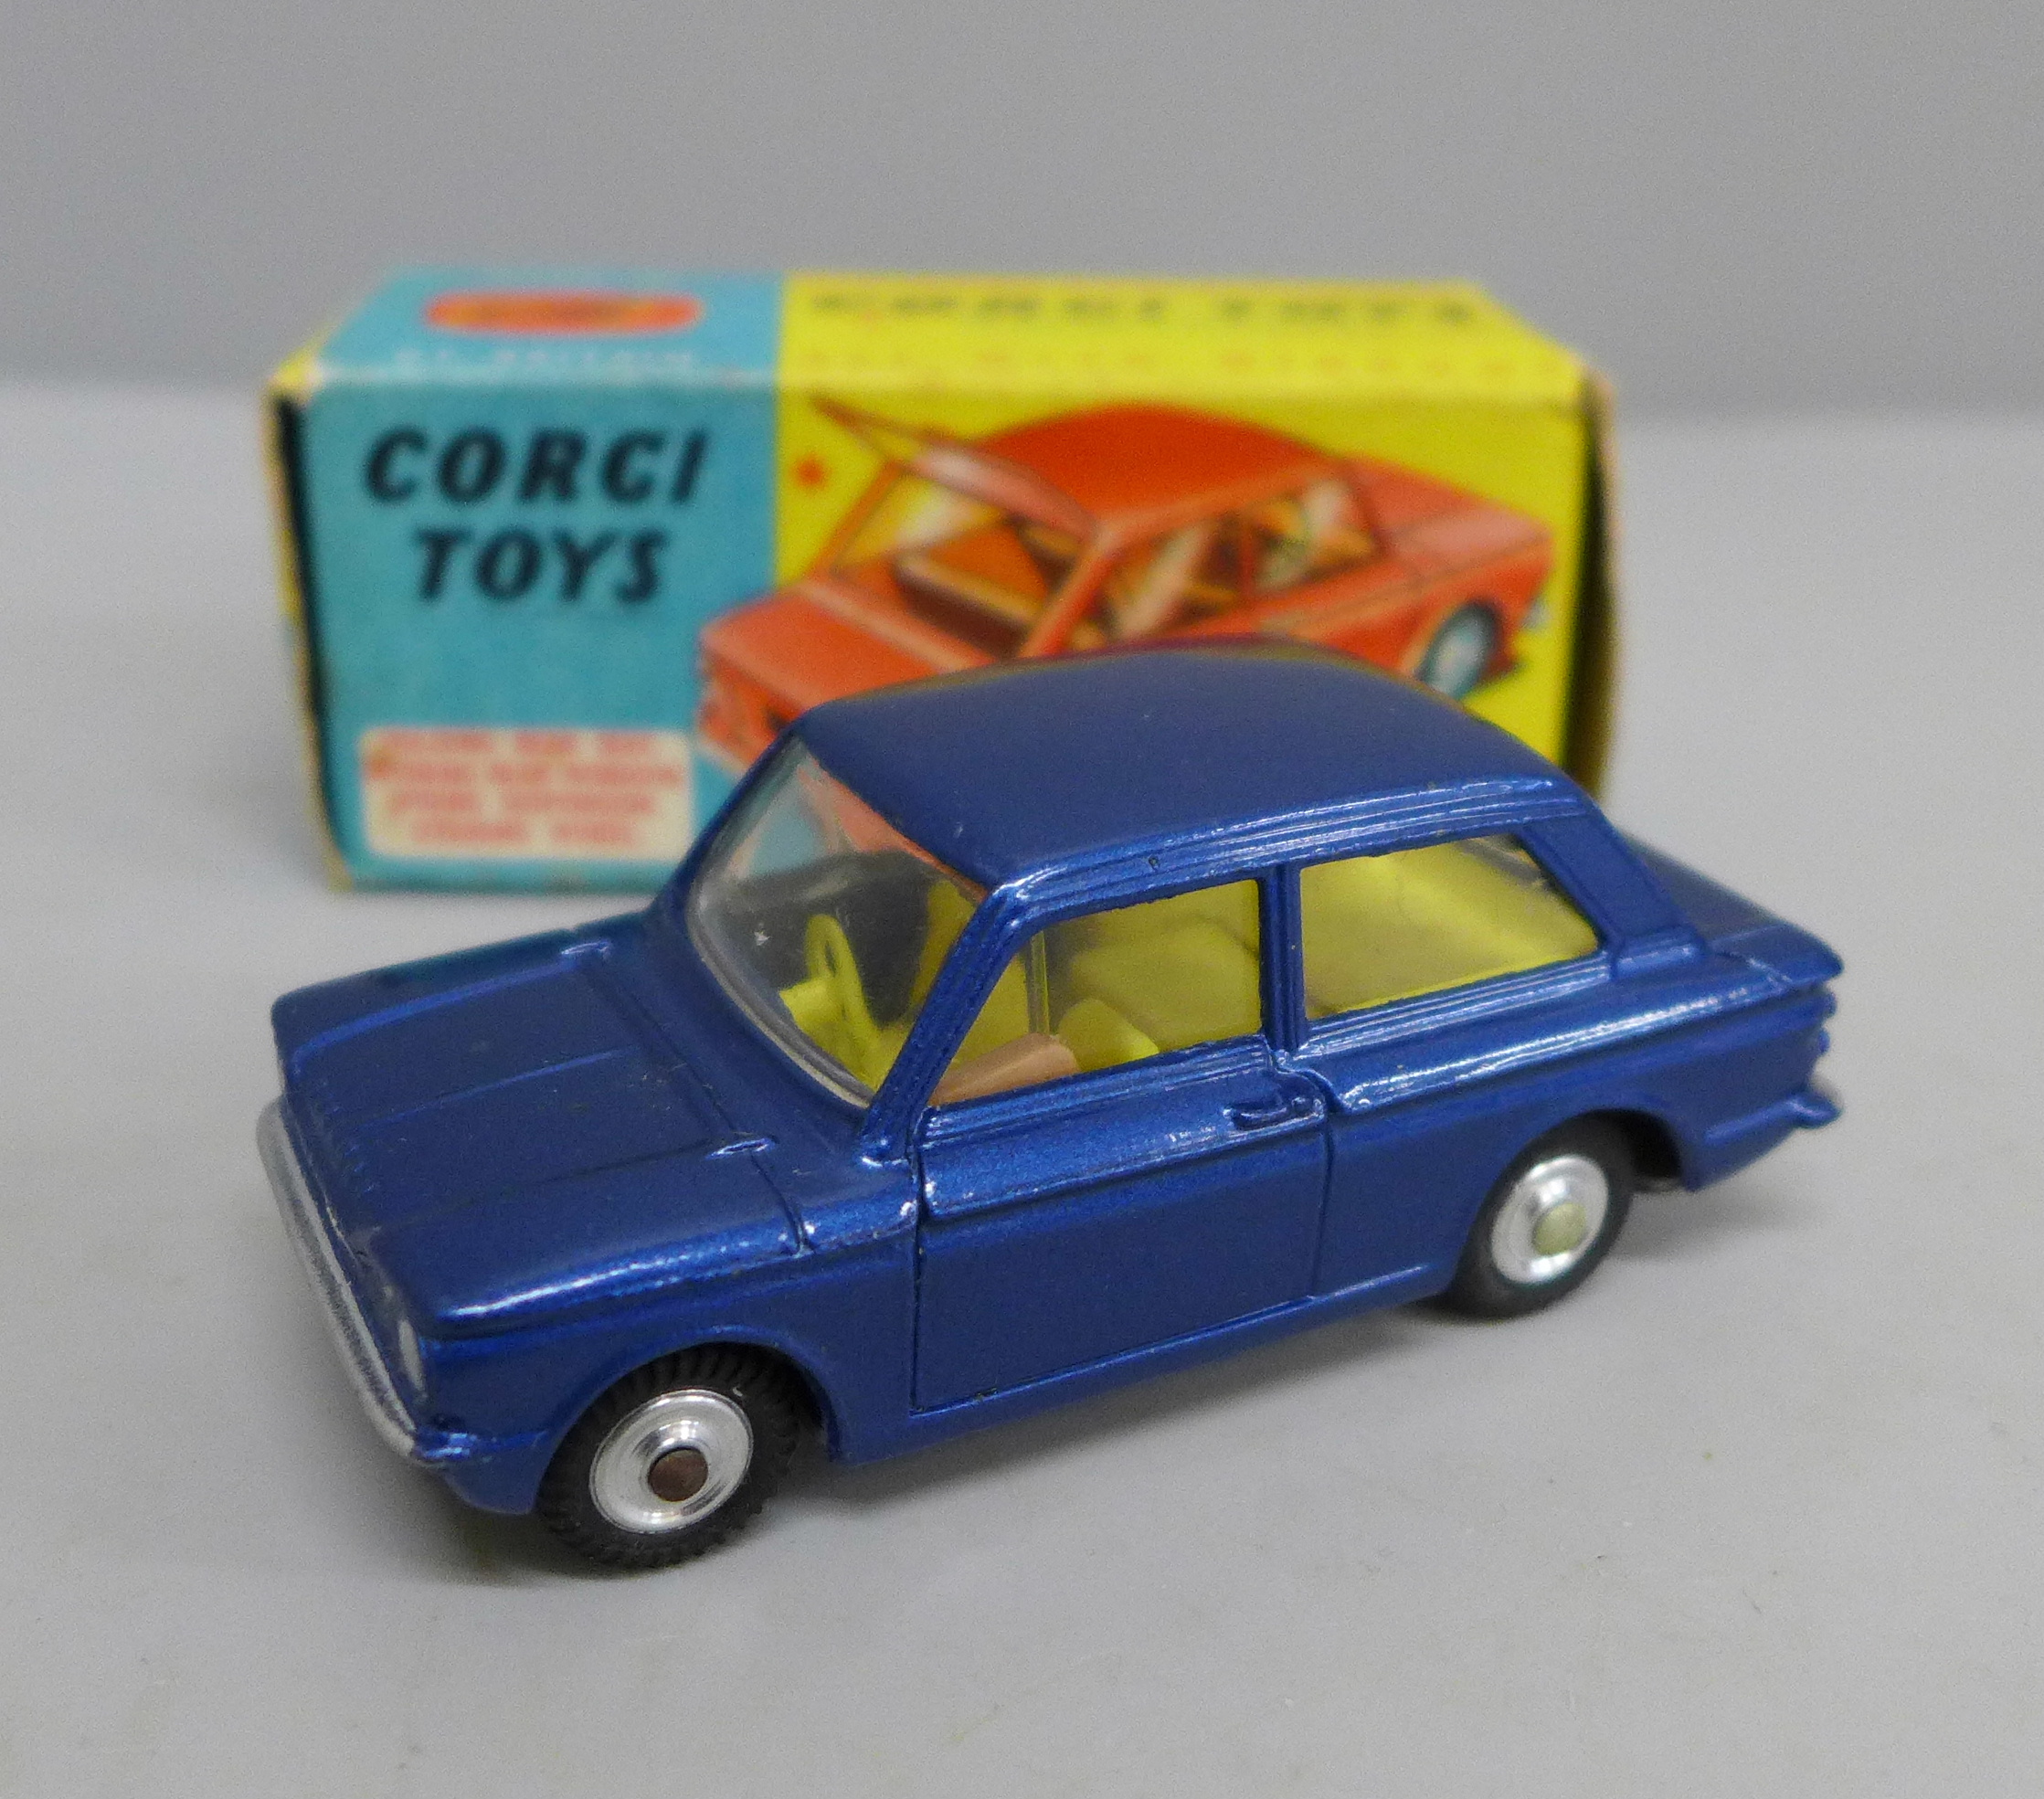 A Corgi Toys no.251 Hillman Imp, blue body with yellow interior, in original box with operating